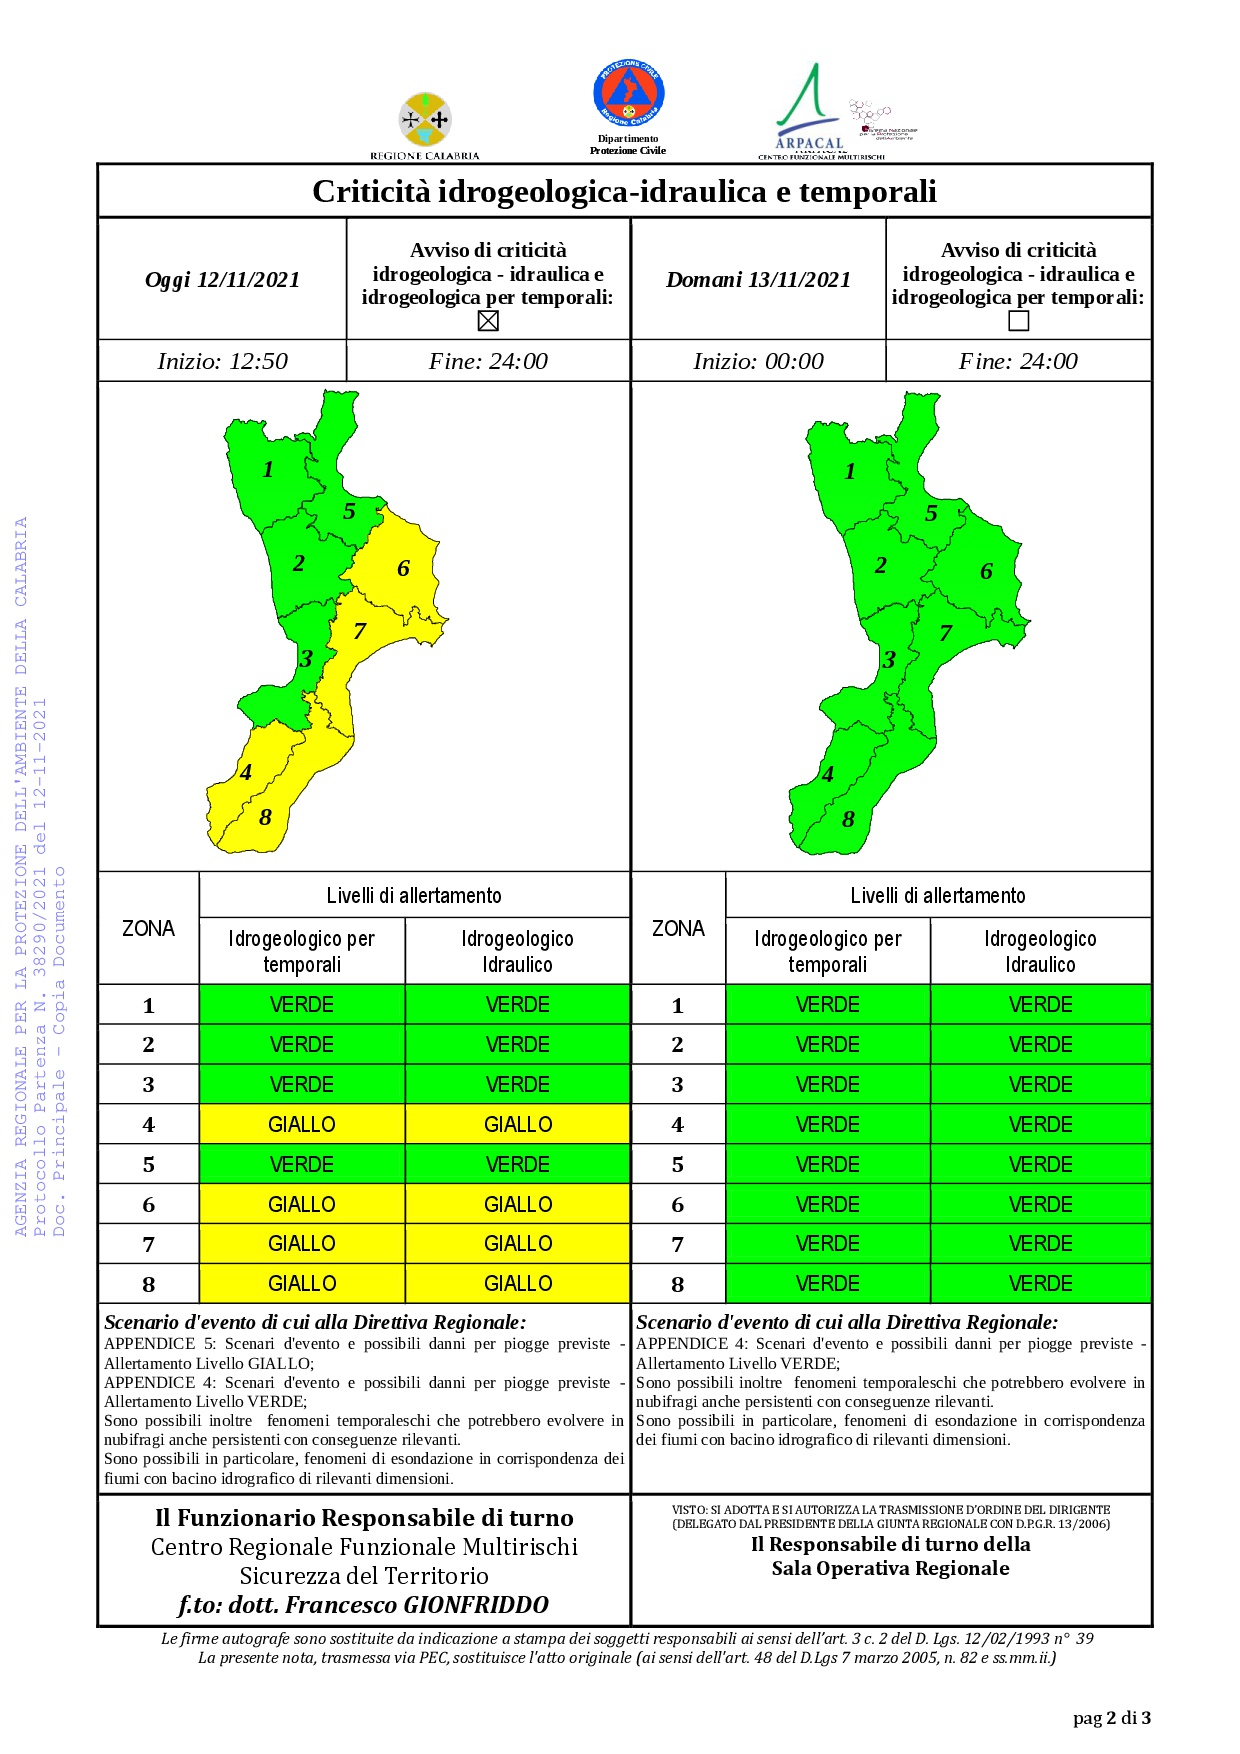 Criticità idrogeologica-idraulica e temporali in Calabria 12-11-2021